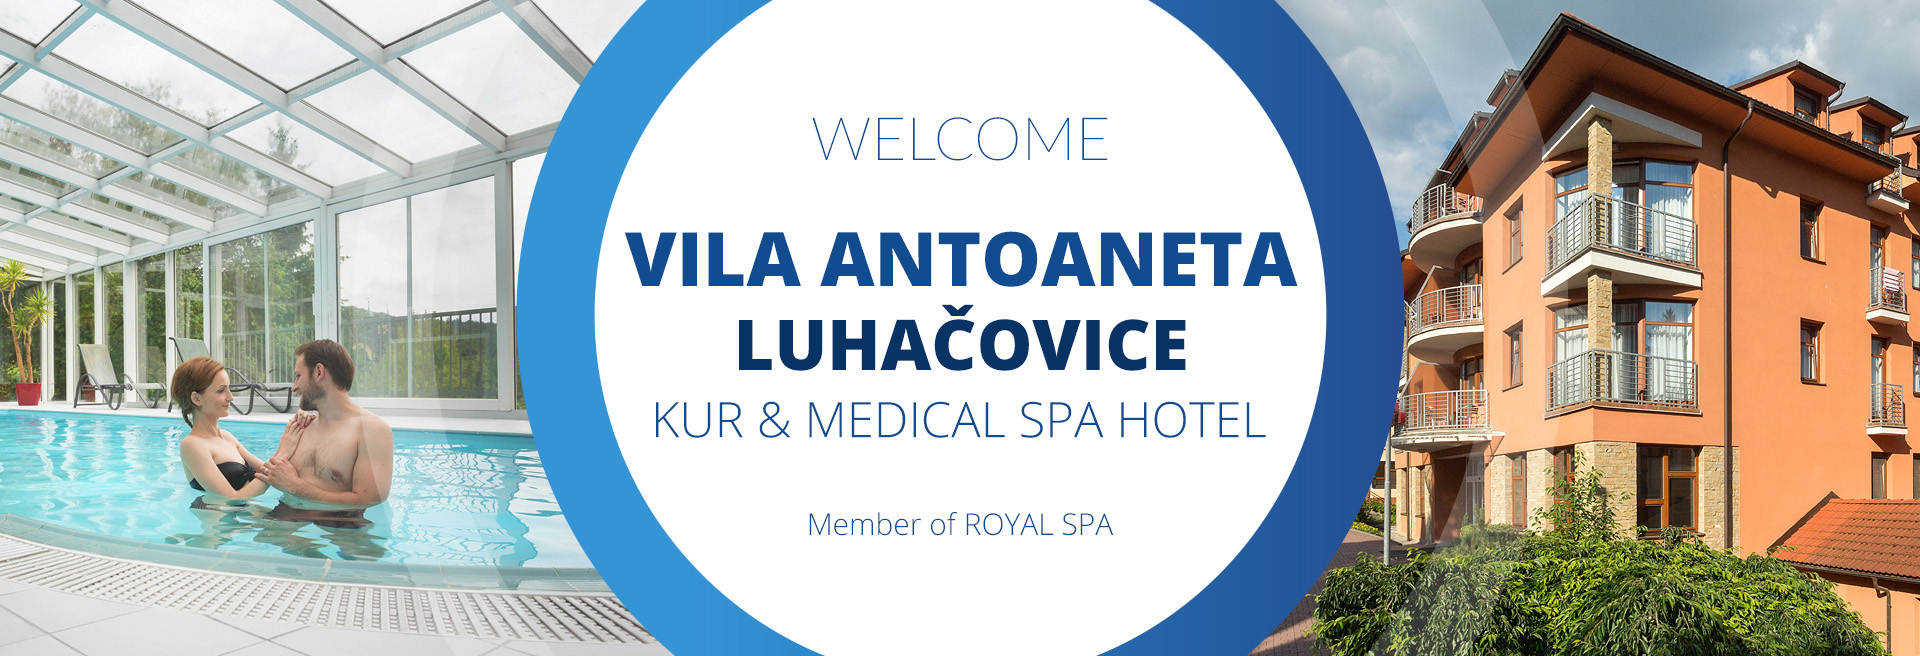 Accommodation - Spa hotel VILA ANTOANETA Luhačovice